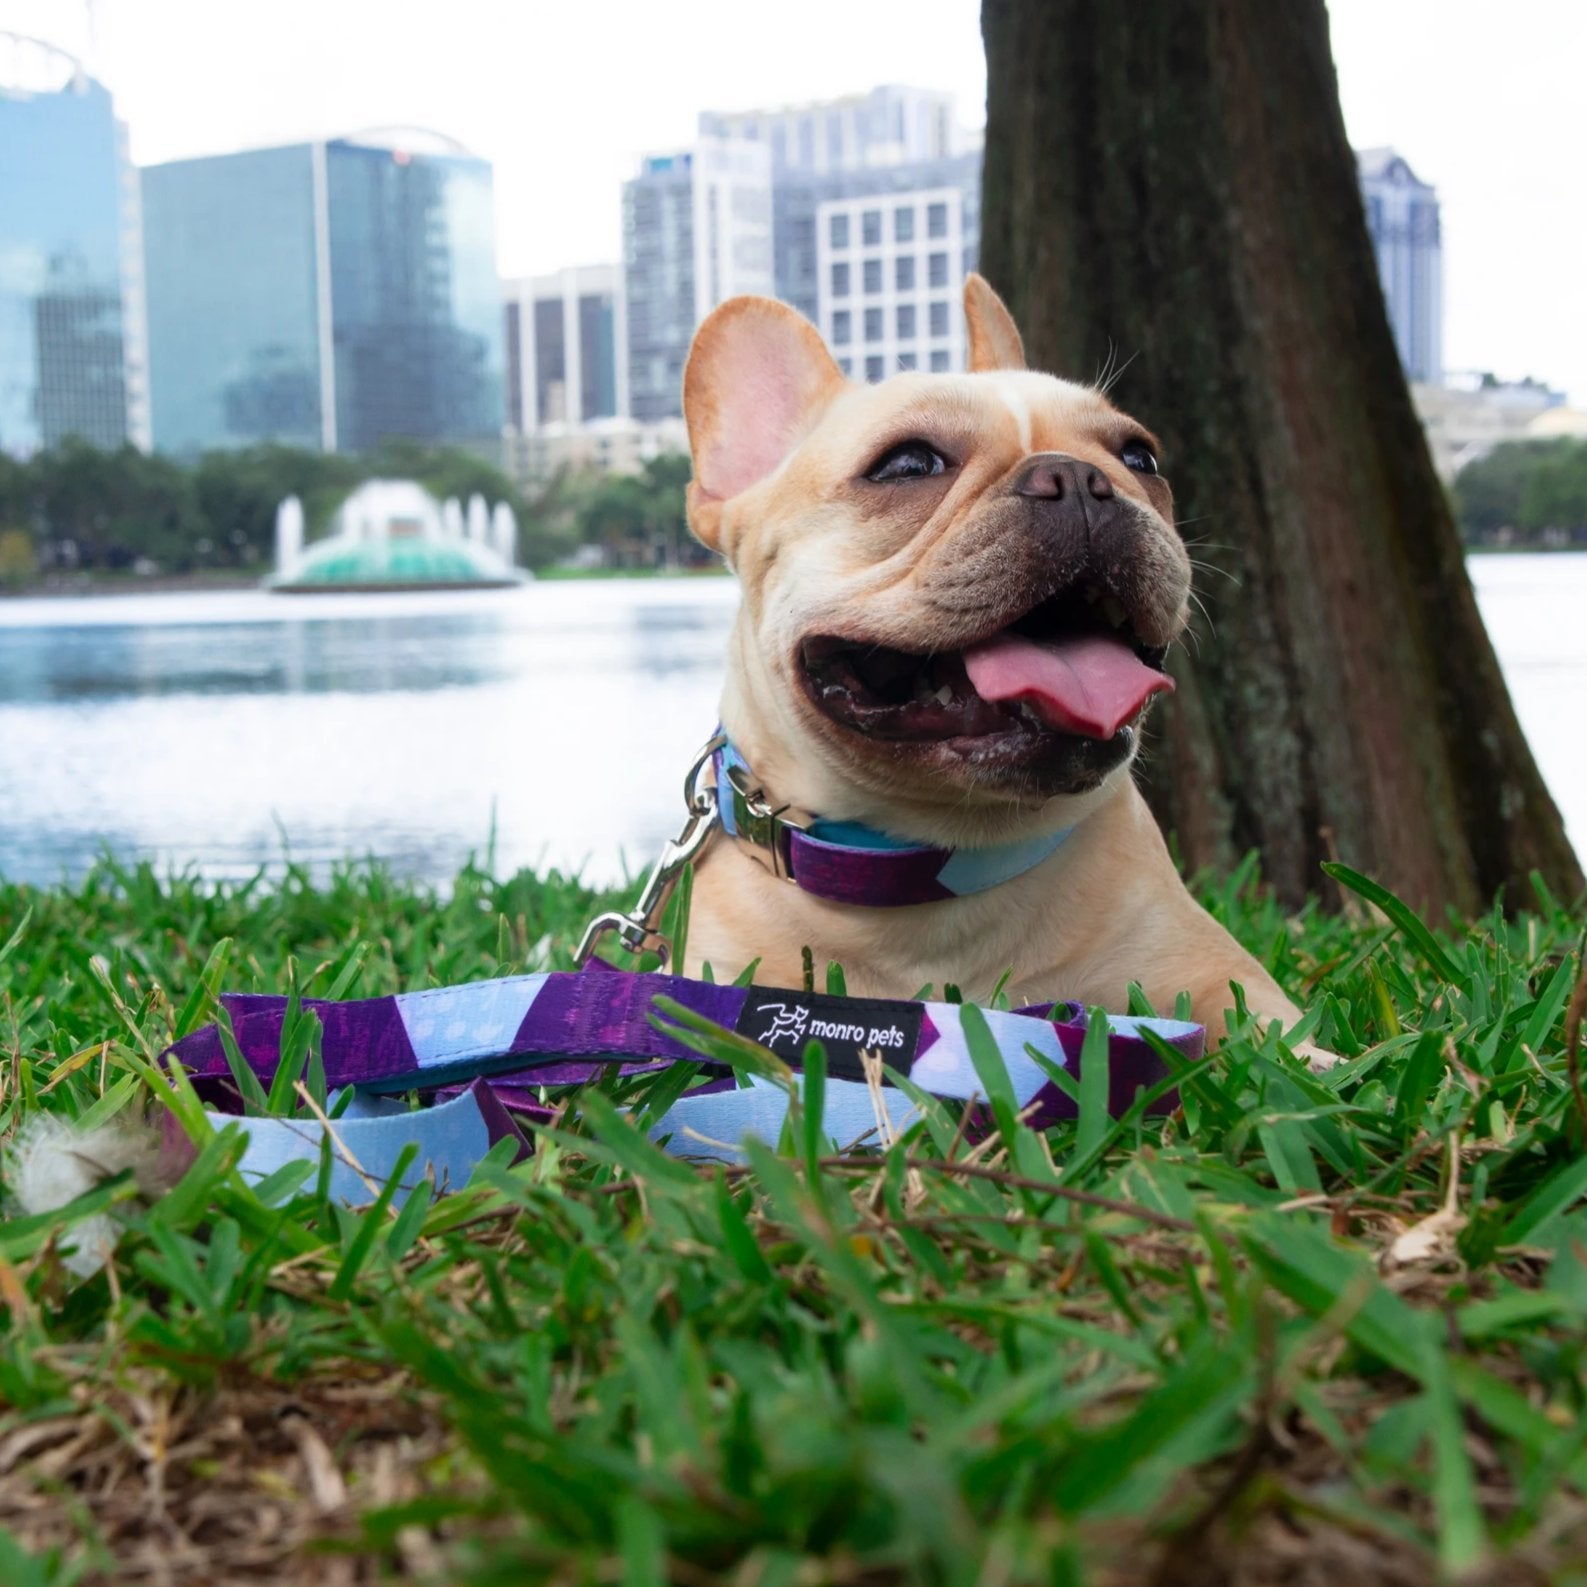 Metric Floral - Padded Dog Collar - 6 Foot Dog Leash With Padded Handle - Lake Eola - Downtown Orlando Florida - Mimosa Laying on Grass - French Bulldog